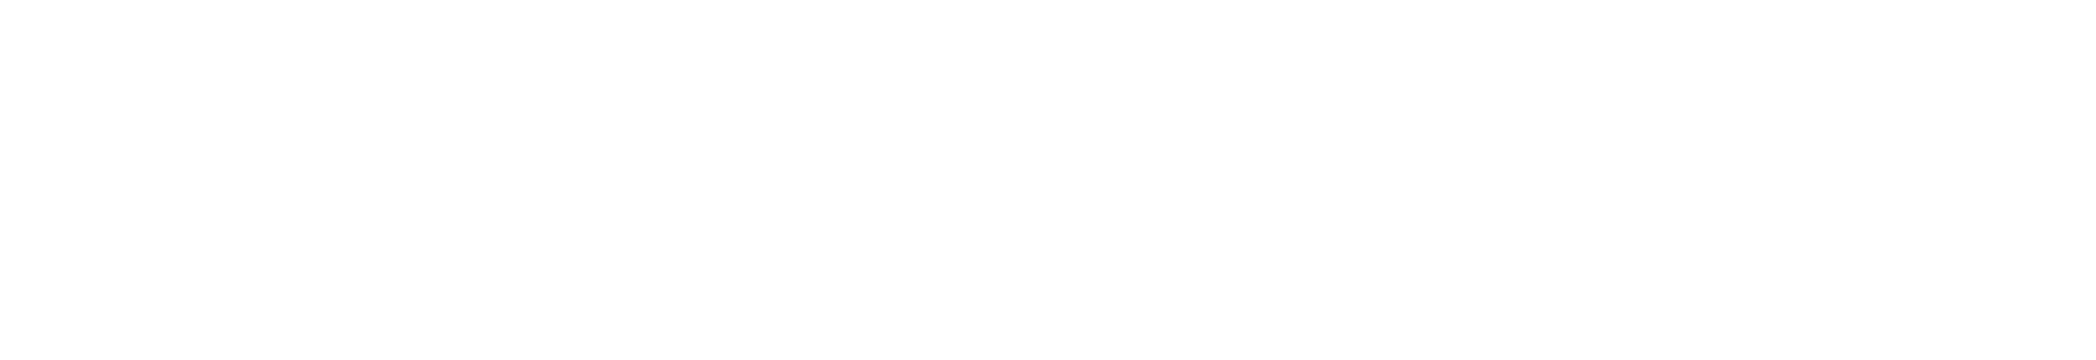 TalentFill Logo_Reverse